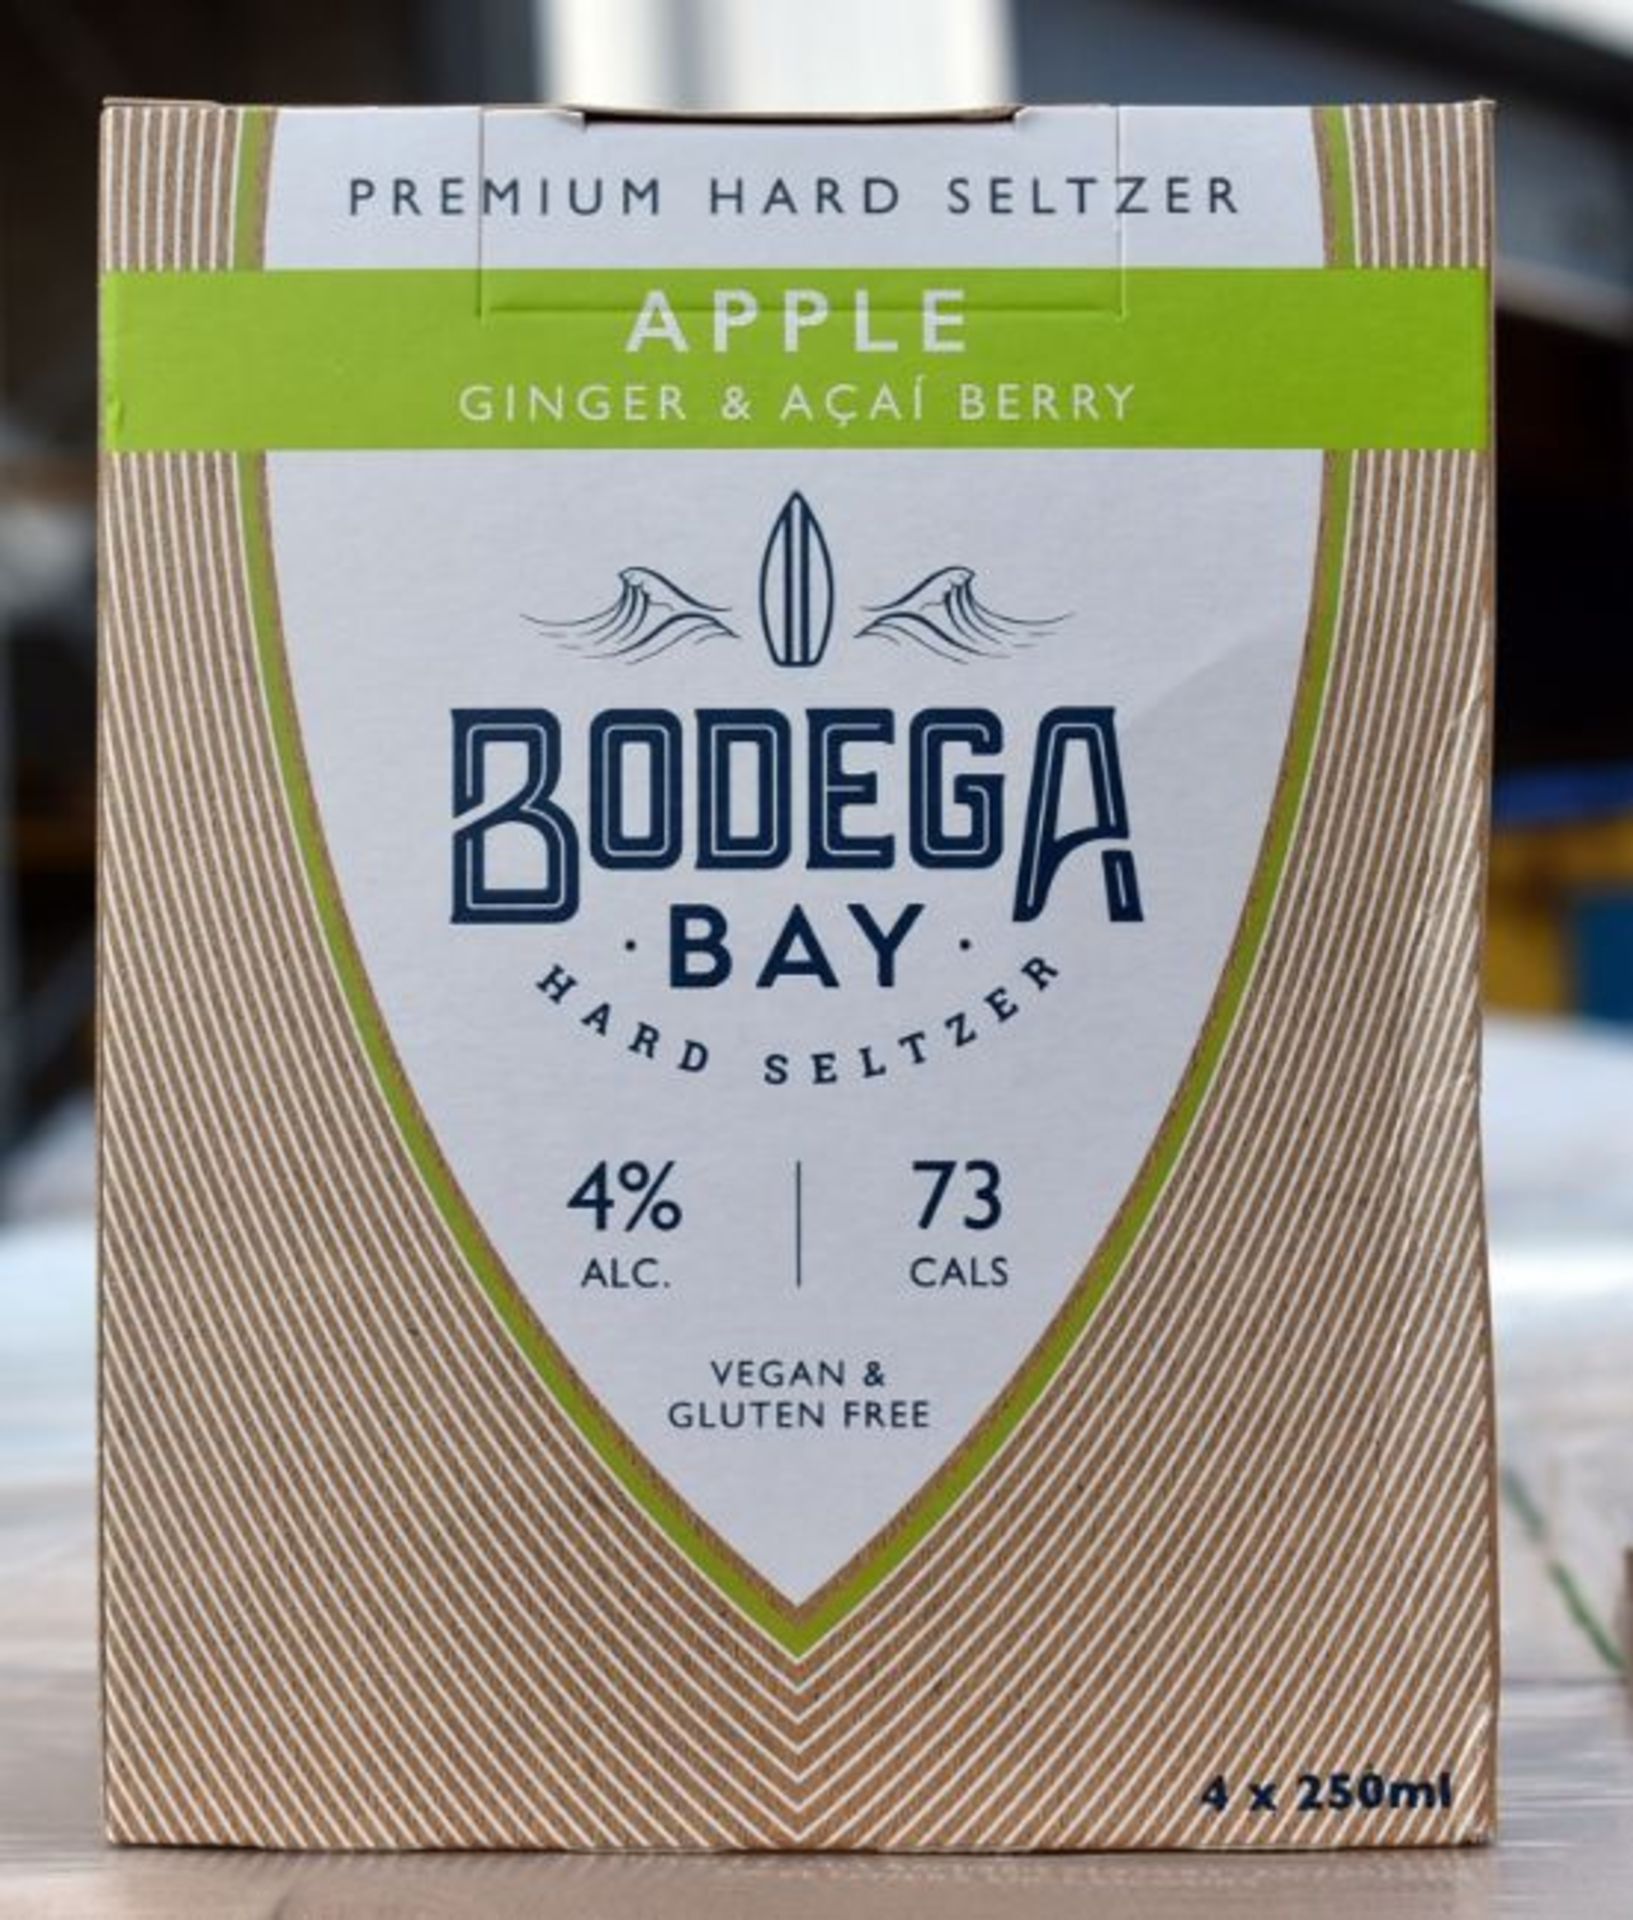 24 x Bodega Bay Hard Seltzer 250ml Alcoholic Sparkling Water Drinks - Apple Ginger & Acai Berry - Image 6 of 9